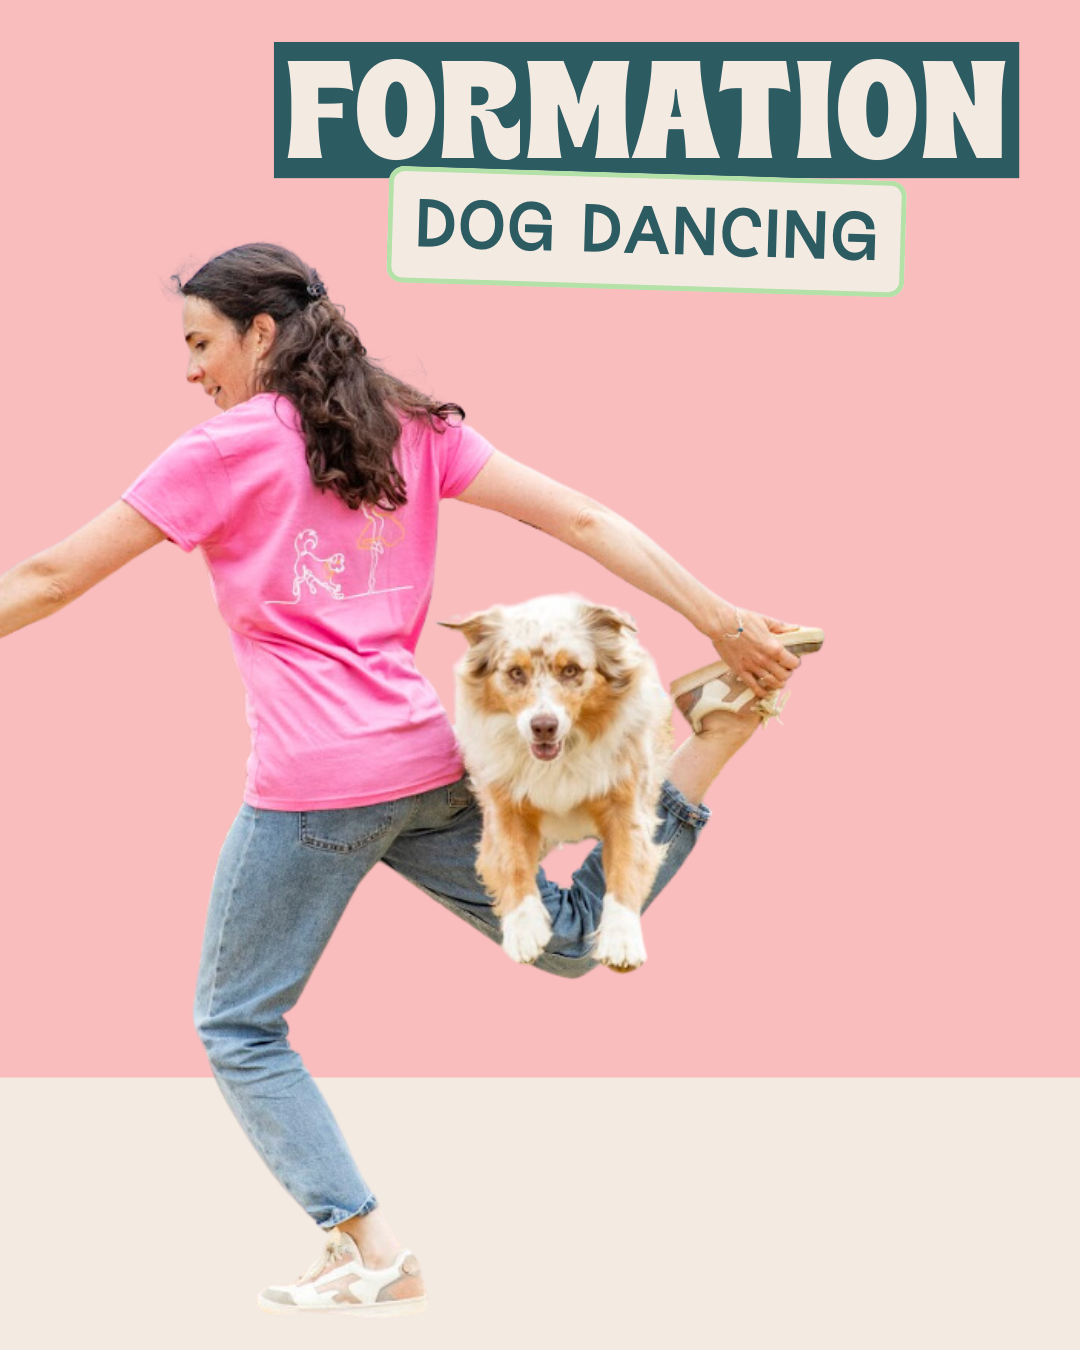 Formation pour commencer le dog dancing